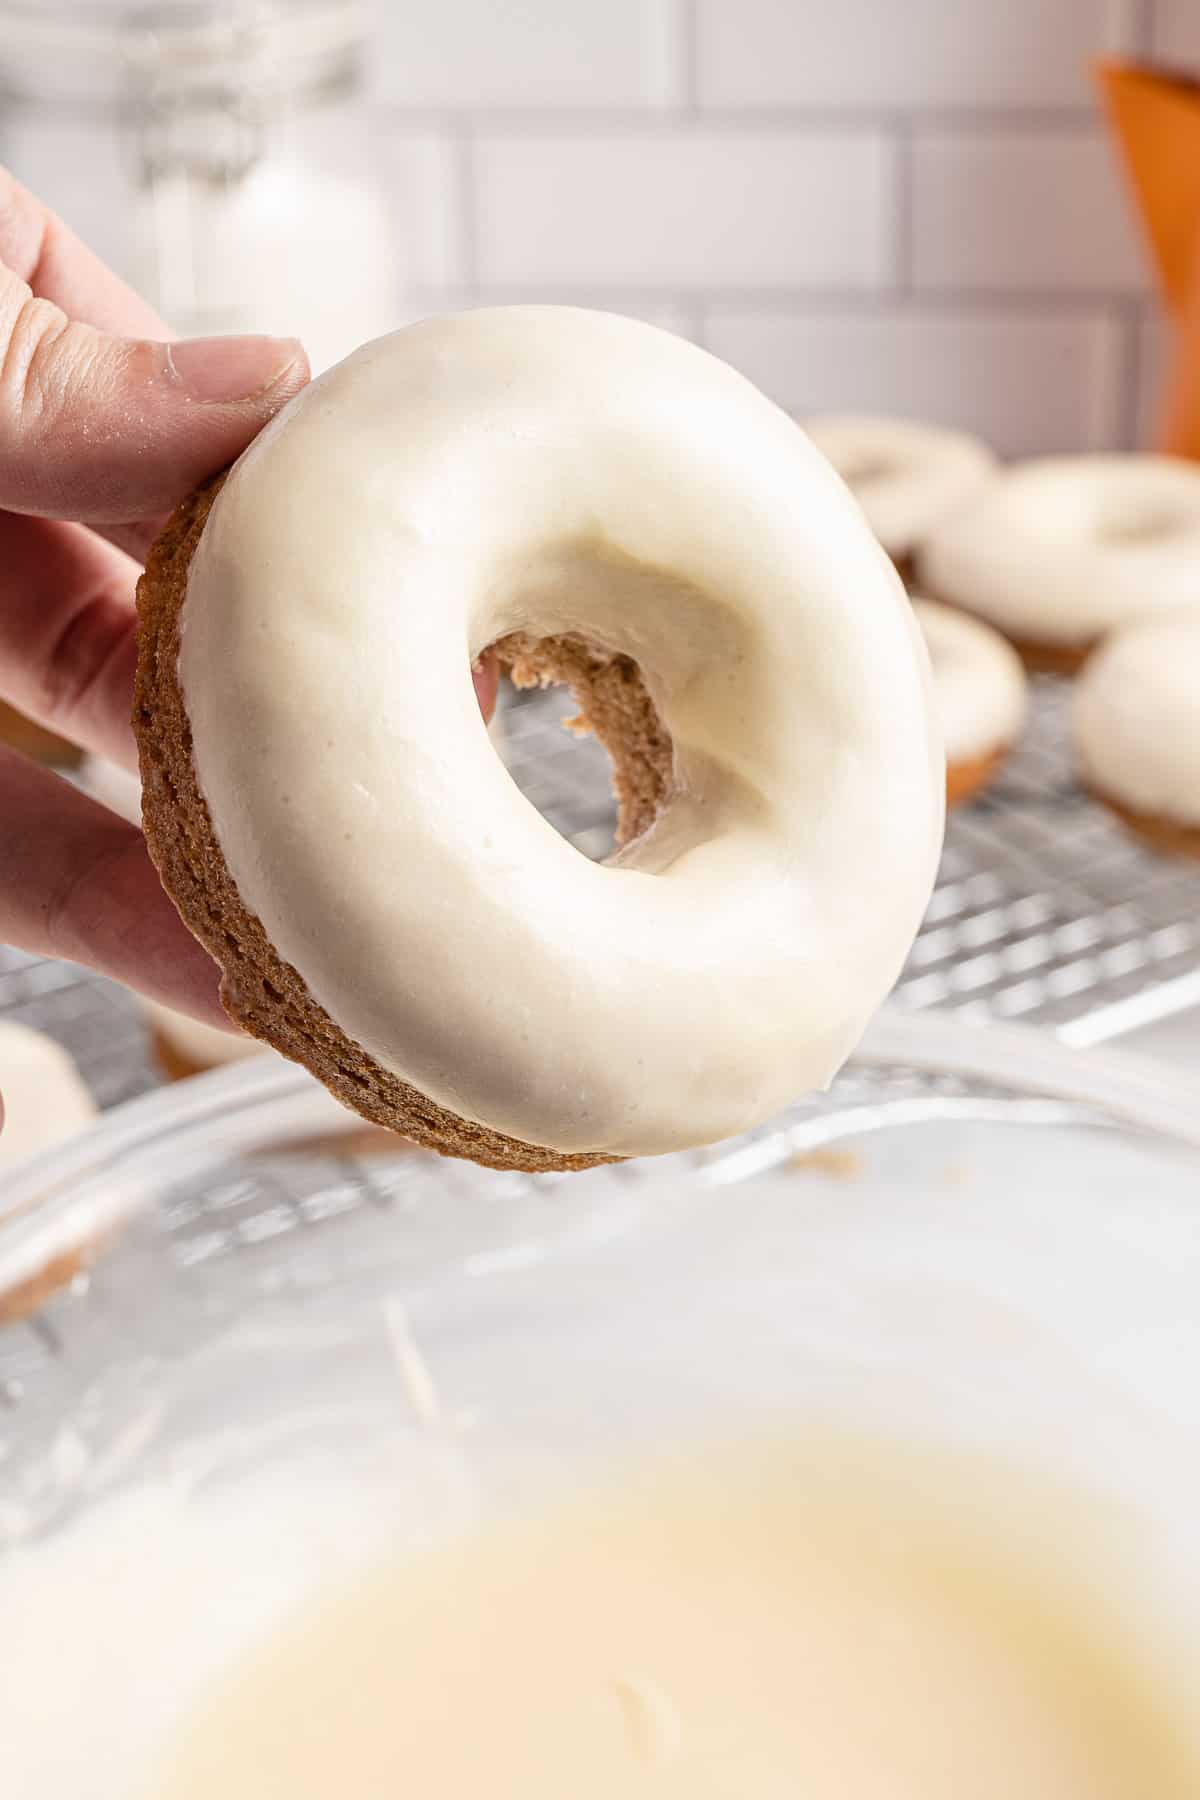 hand holding a glazed donut over bowl of glaze.